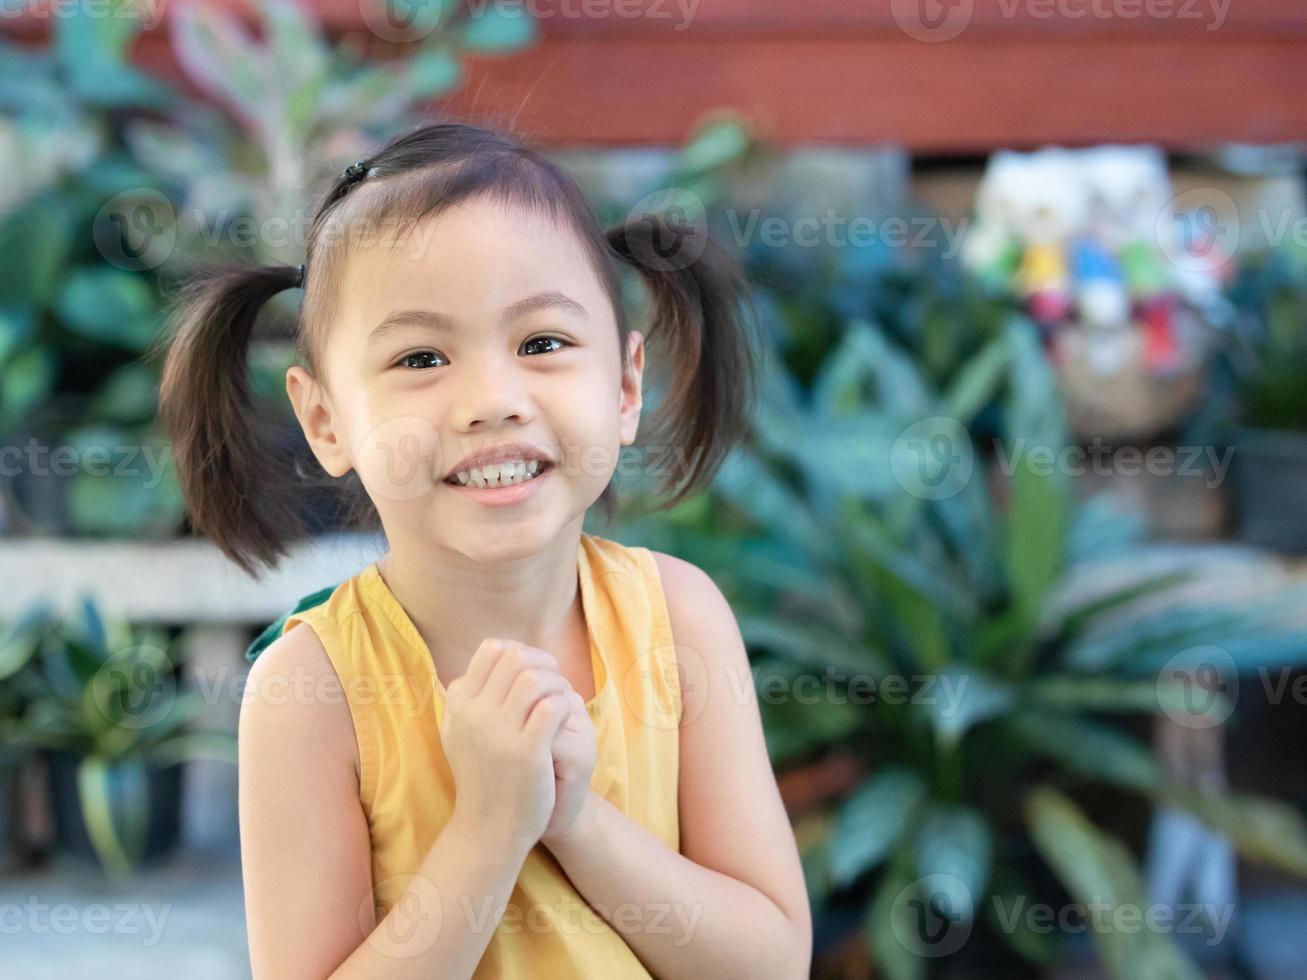 positiva encantadora niña asiática de 4 años de edad, pequeña niña preescolar con adorable cabello de coletas sonriendo mirando a la cámara. foto